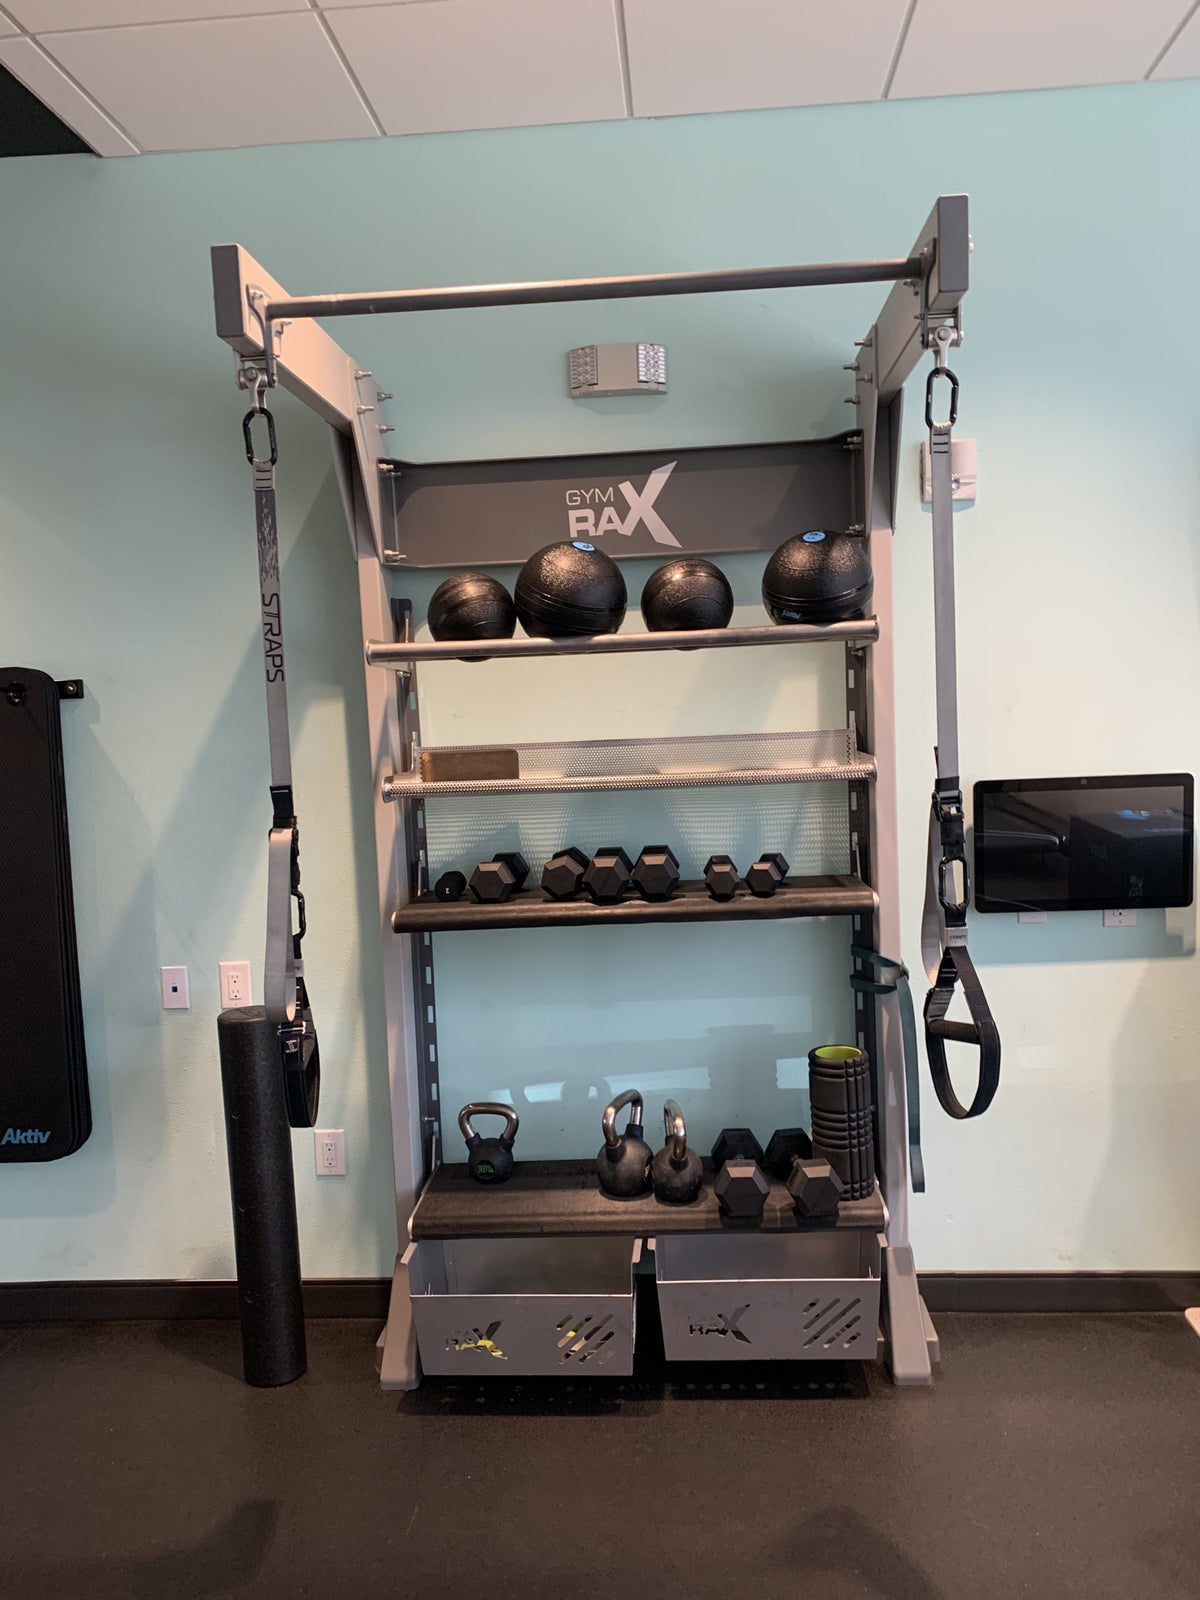 Tru by Hilton Frisco Dallas fitness center weight rack